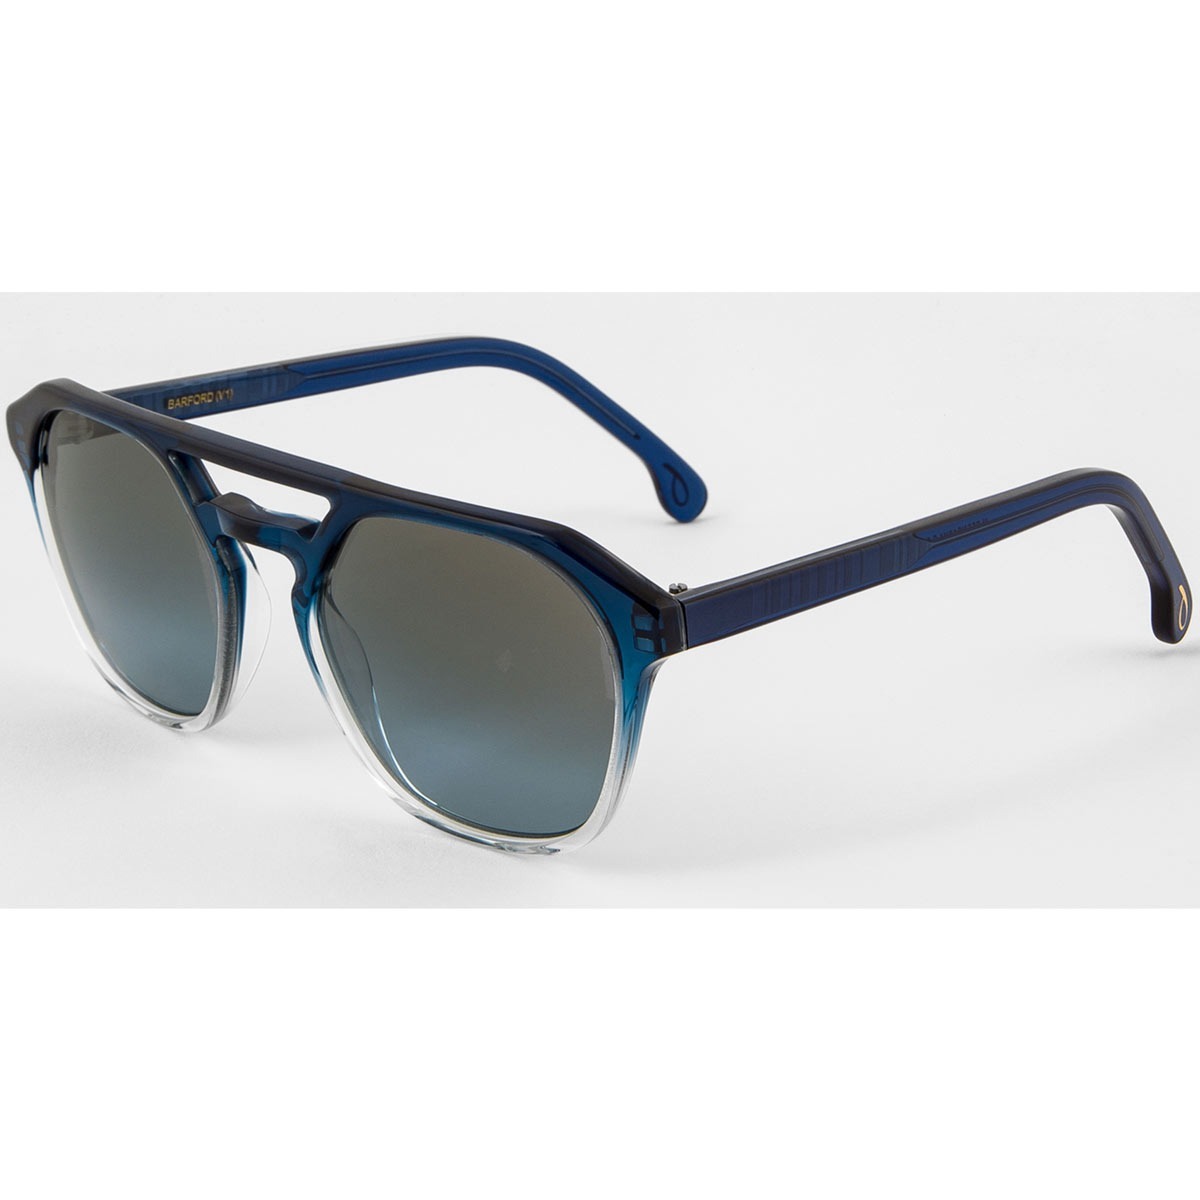 Paul Smith Unisex Sunglasses - Barford Midnight Crystal $29.90 + Free Shipping